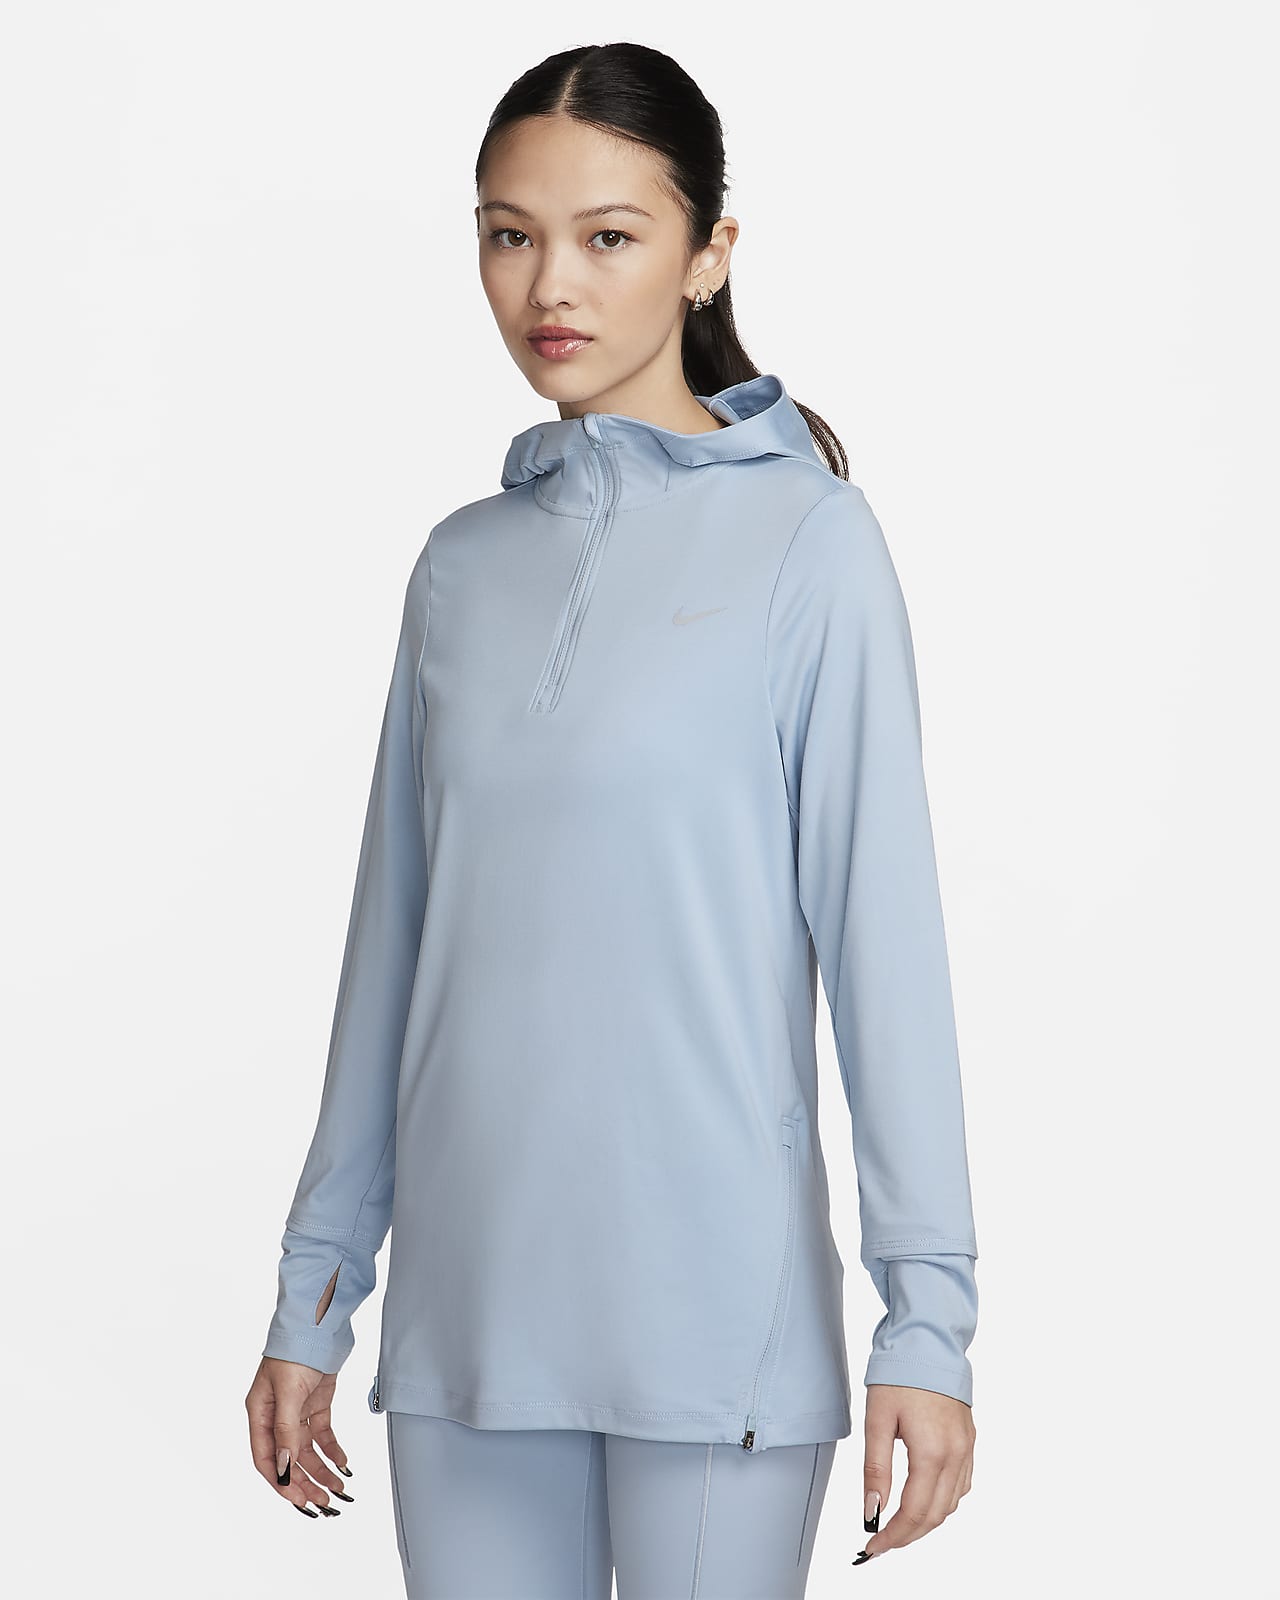 Nike Dri-FIT Swift Element UV Women's Hooded Running Jacket